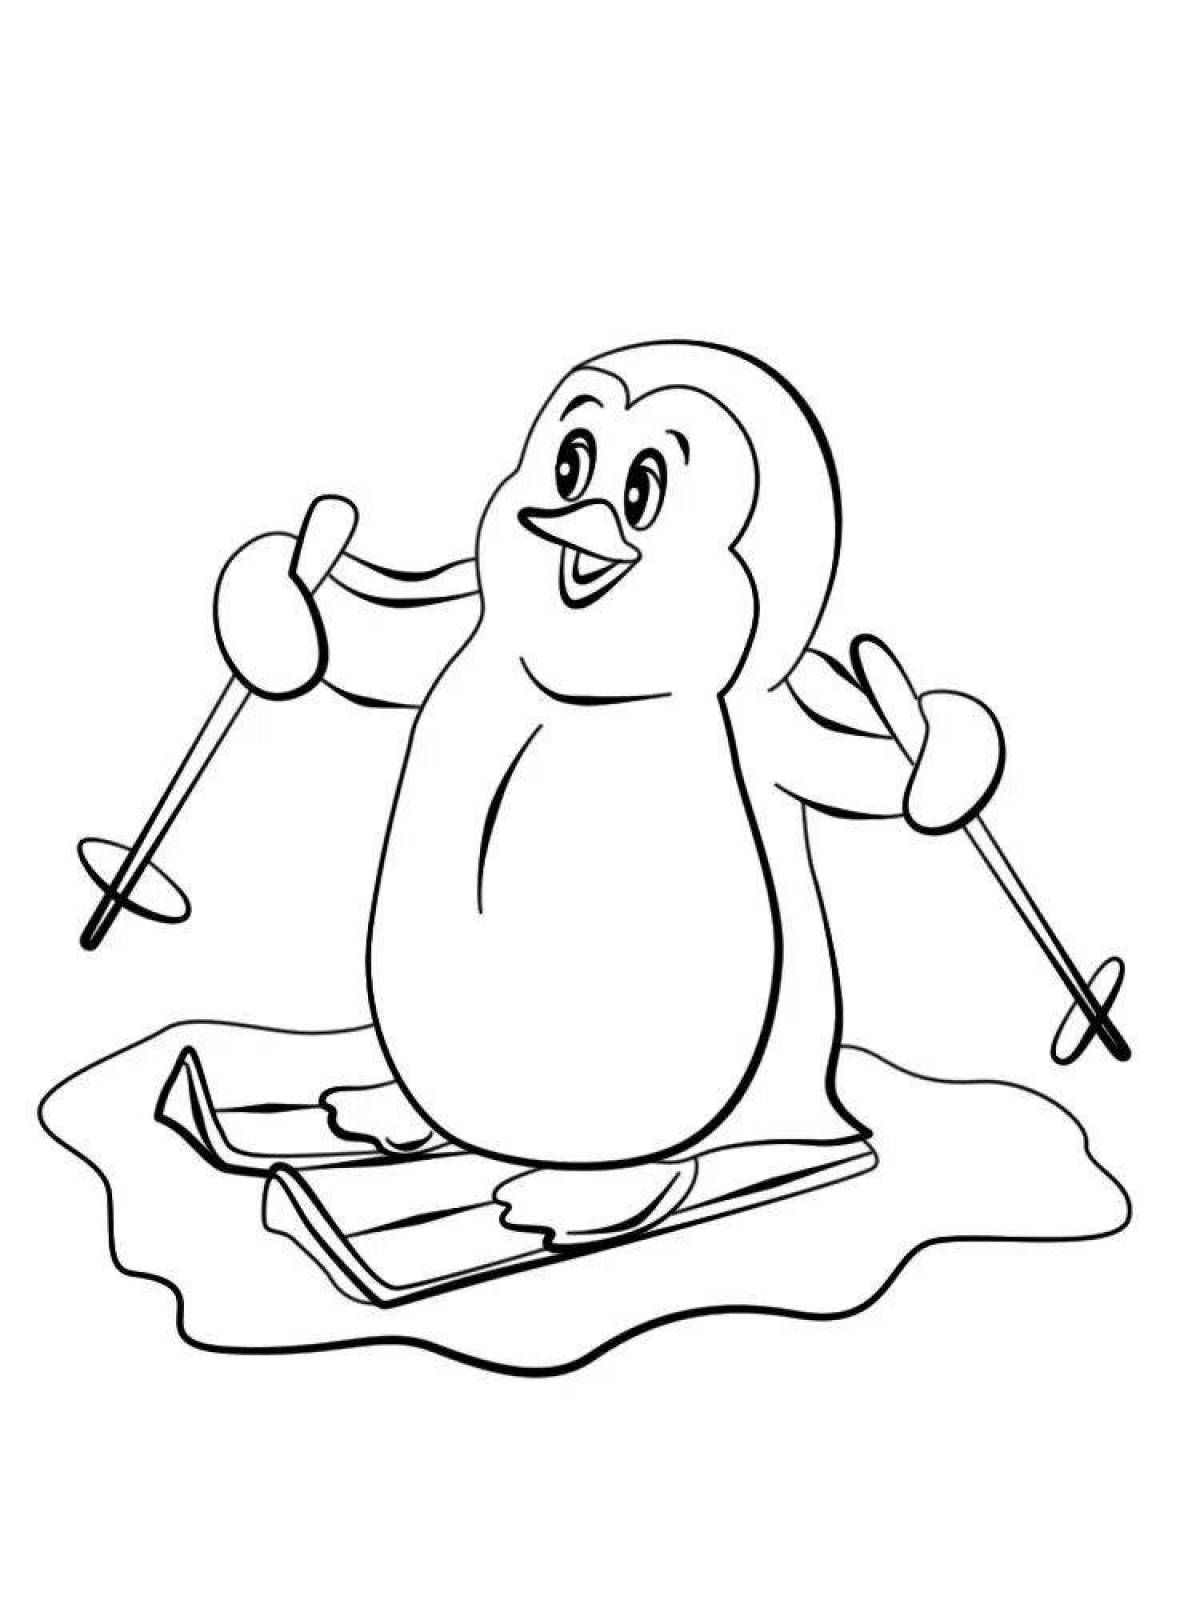 Fun penguin coloring book for kids